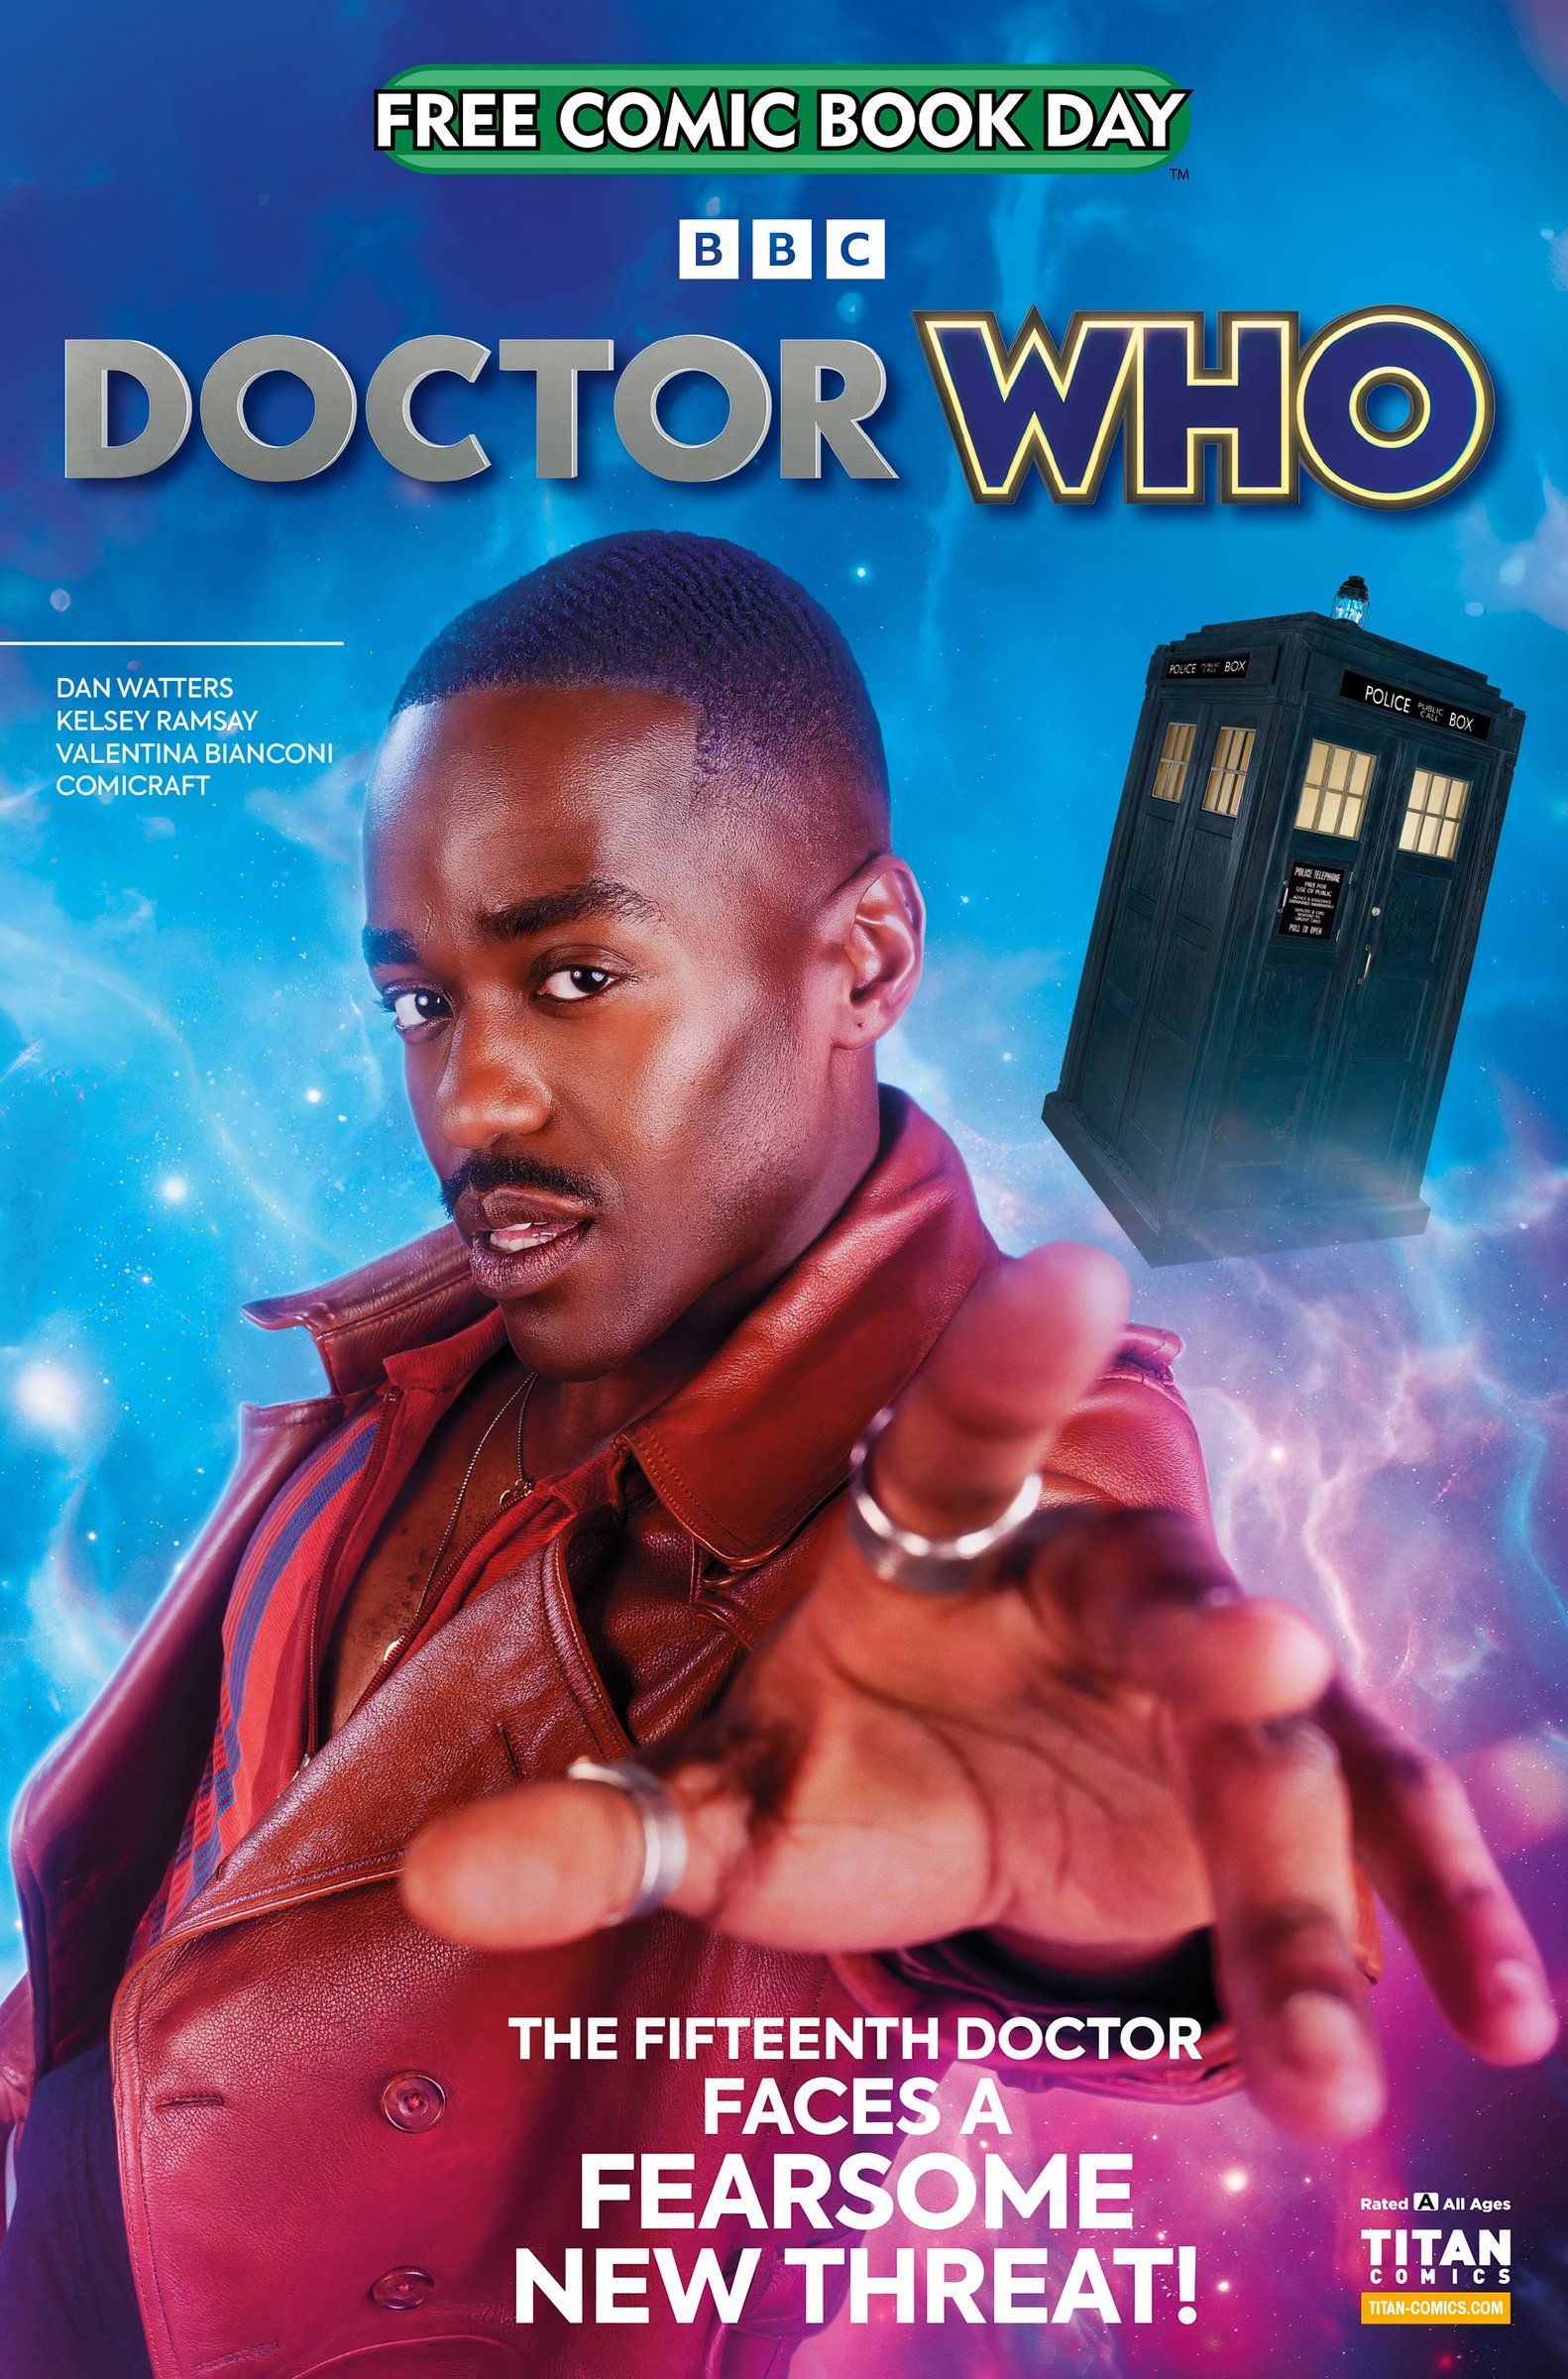 Doctor Who FCBD Cover